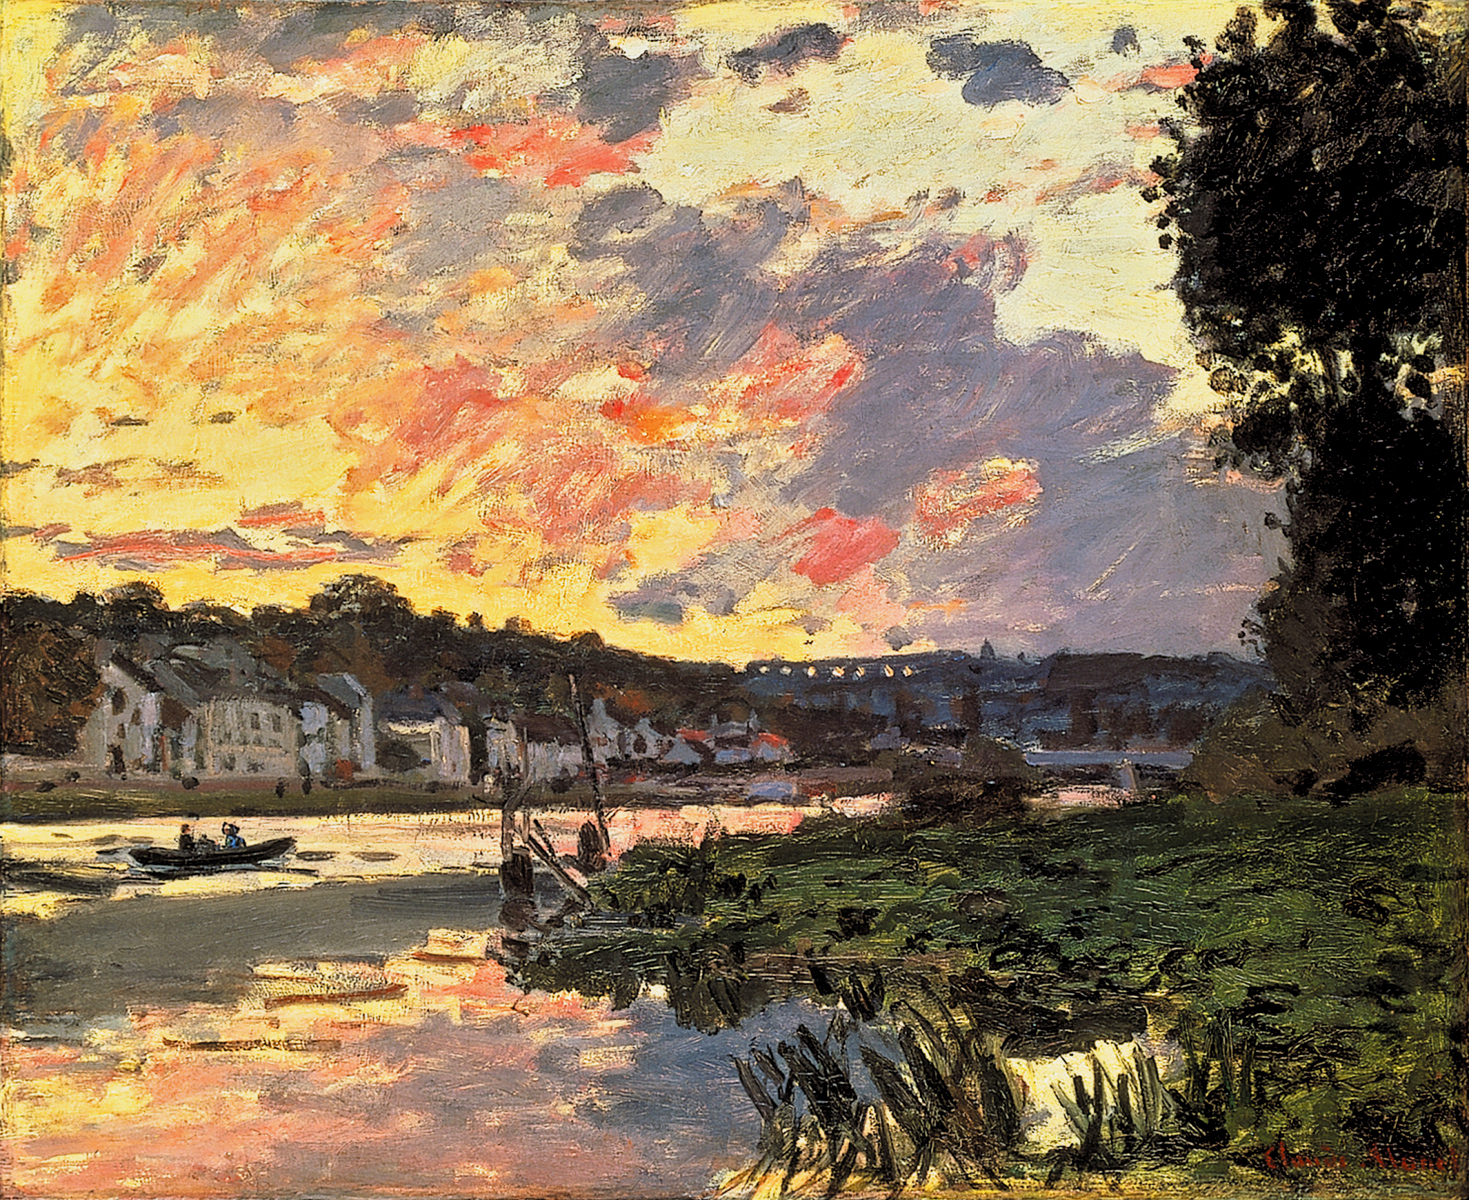 Claude+Monet-1840-1926 (816).jpg